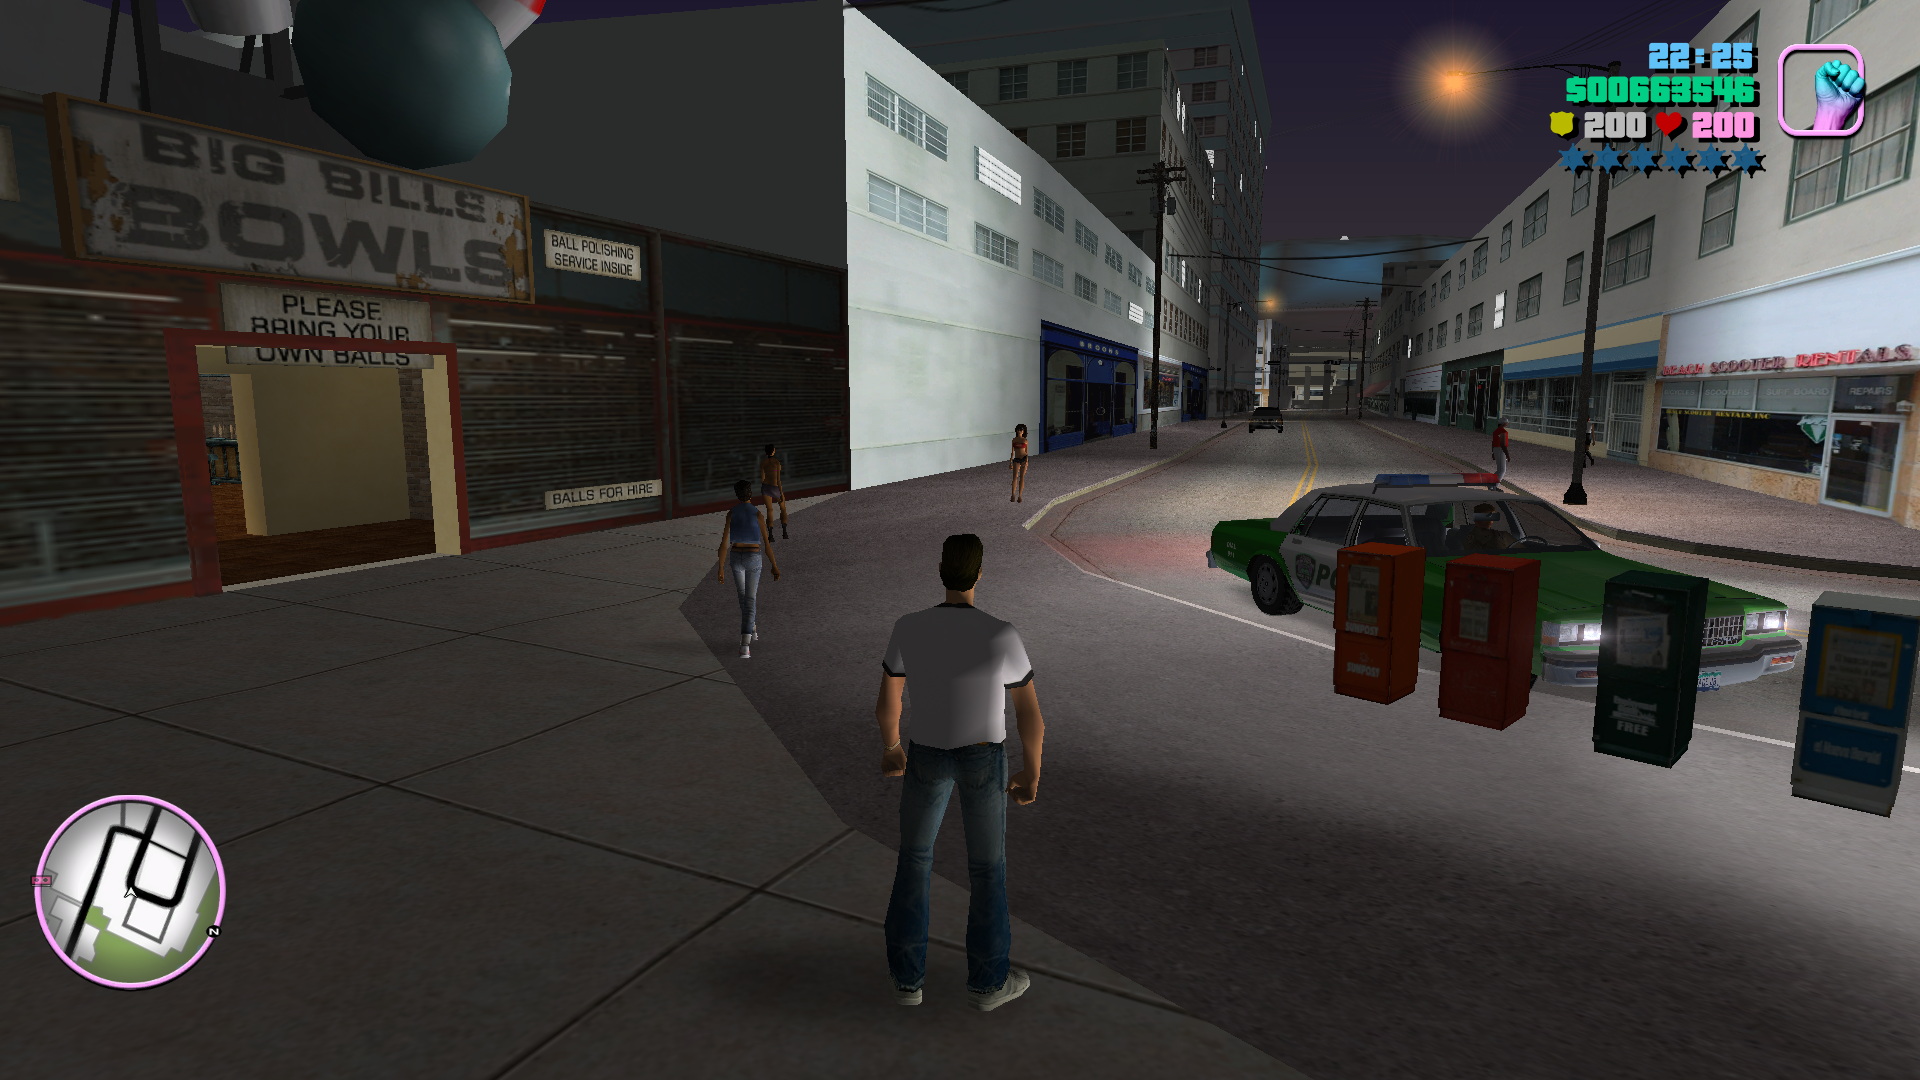 Image 6 - GTA: Miami Beach mod for Grand Theft Auto: Vice City - Mod DB